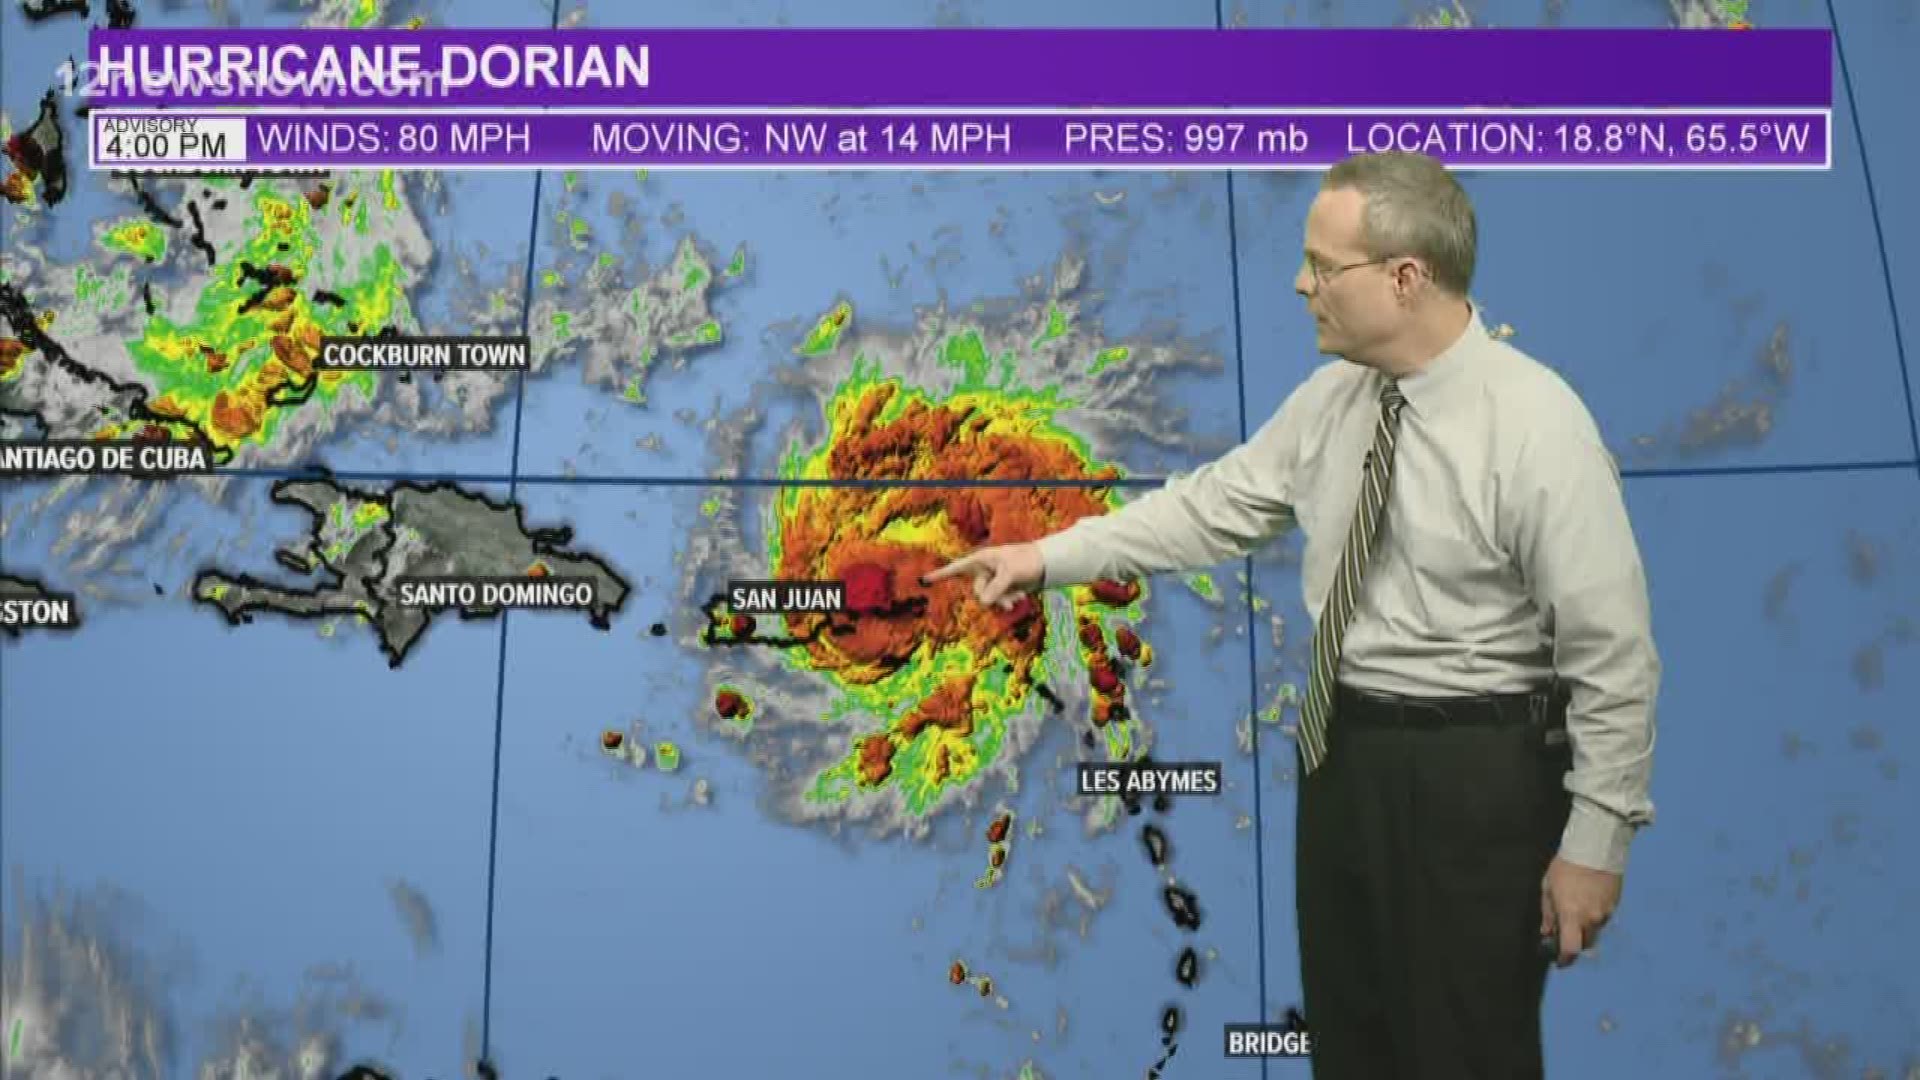 Hurricane Dorian has strengthened to 80 mph.